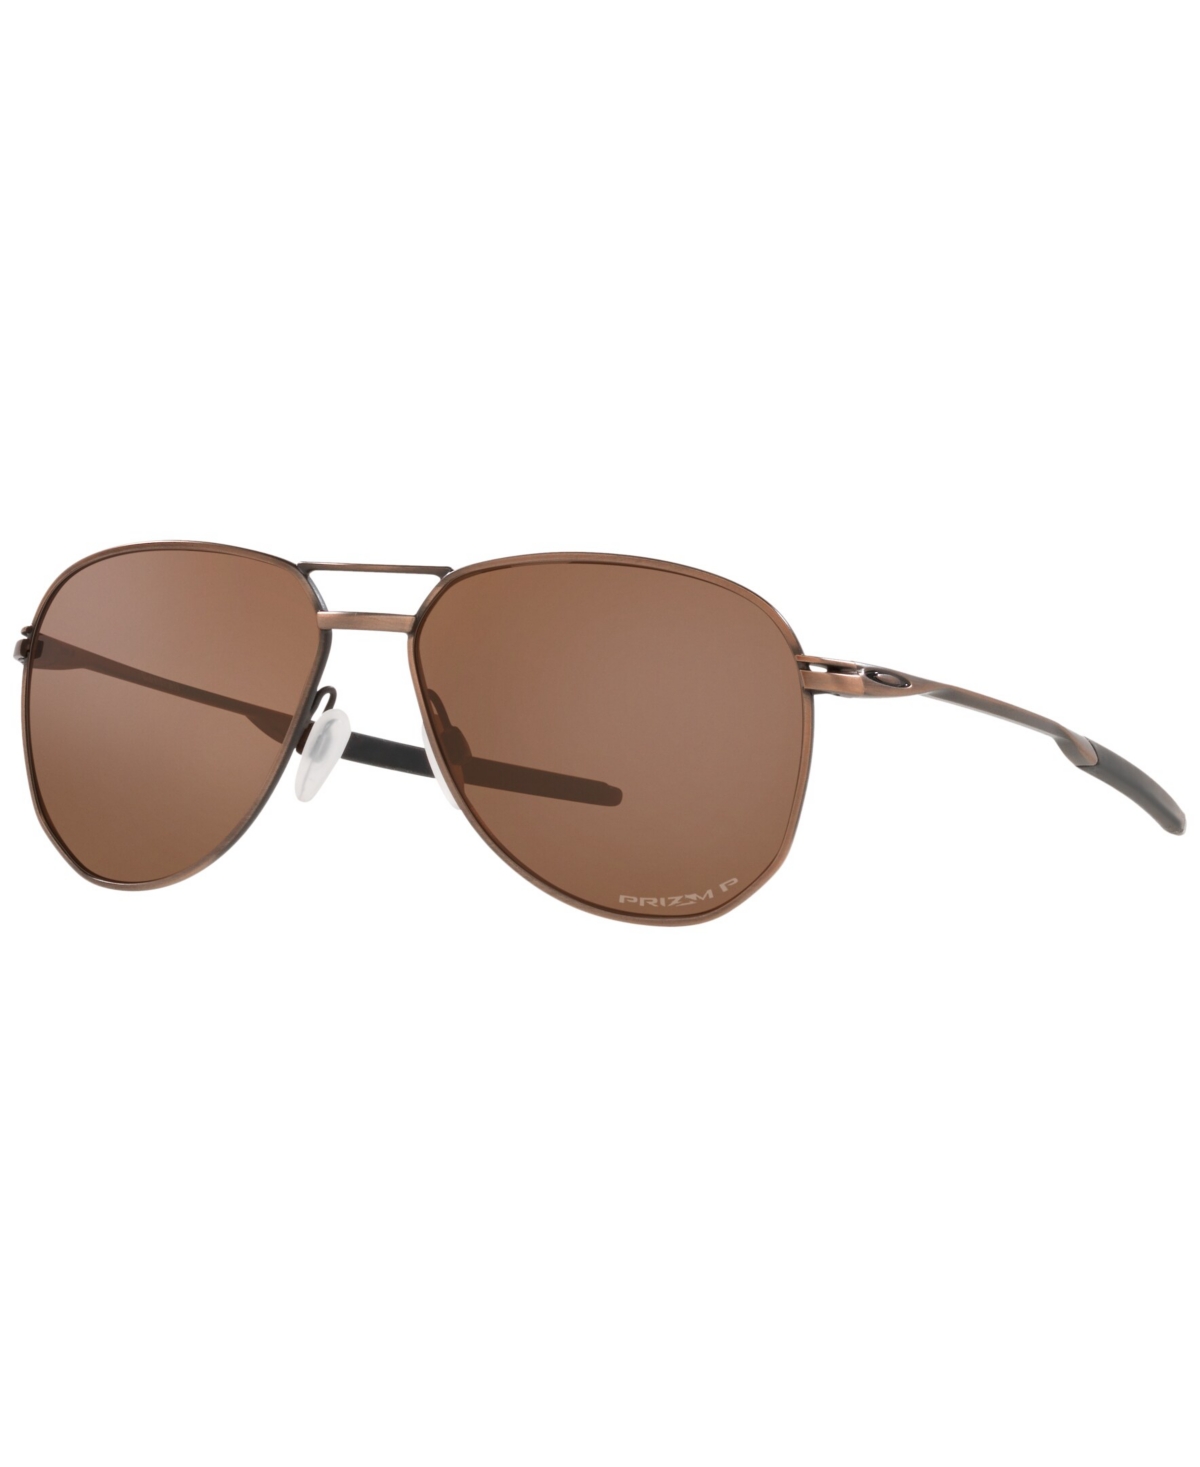 Men's Polarized Sunglasses, OO4147 Contrail 57 - Satin Toast